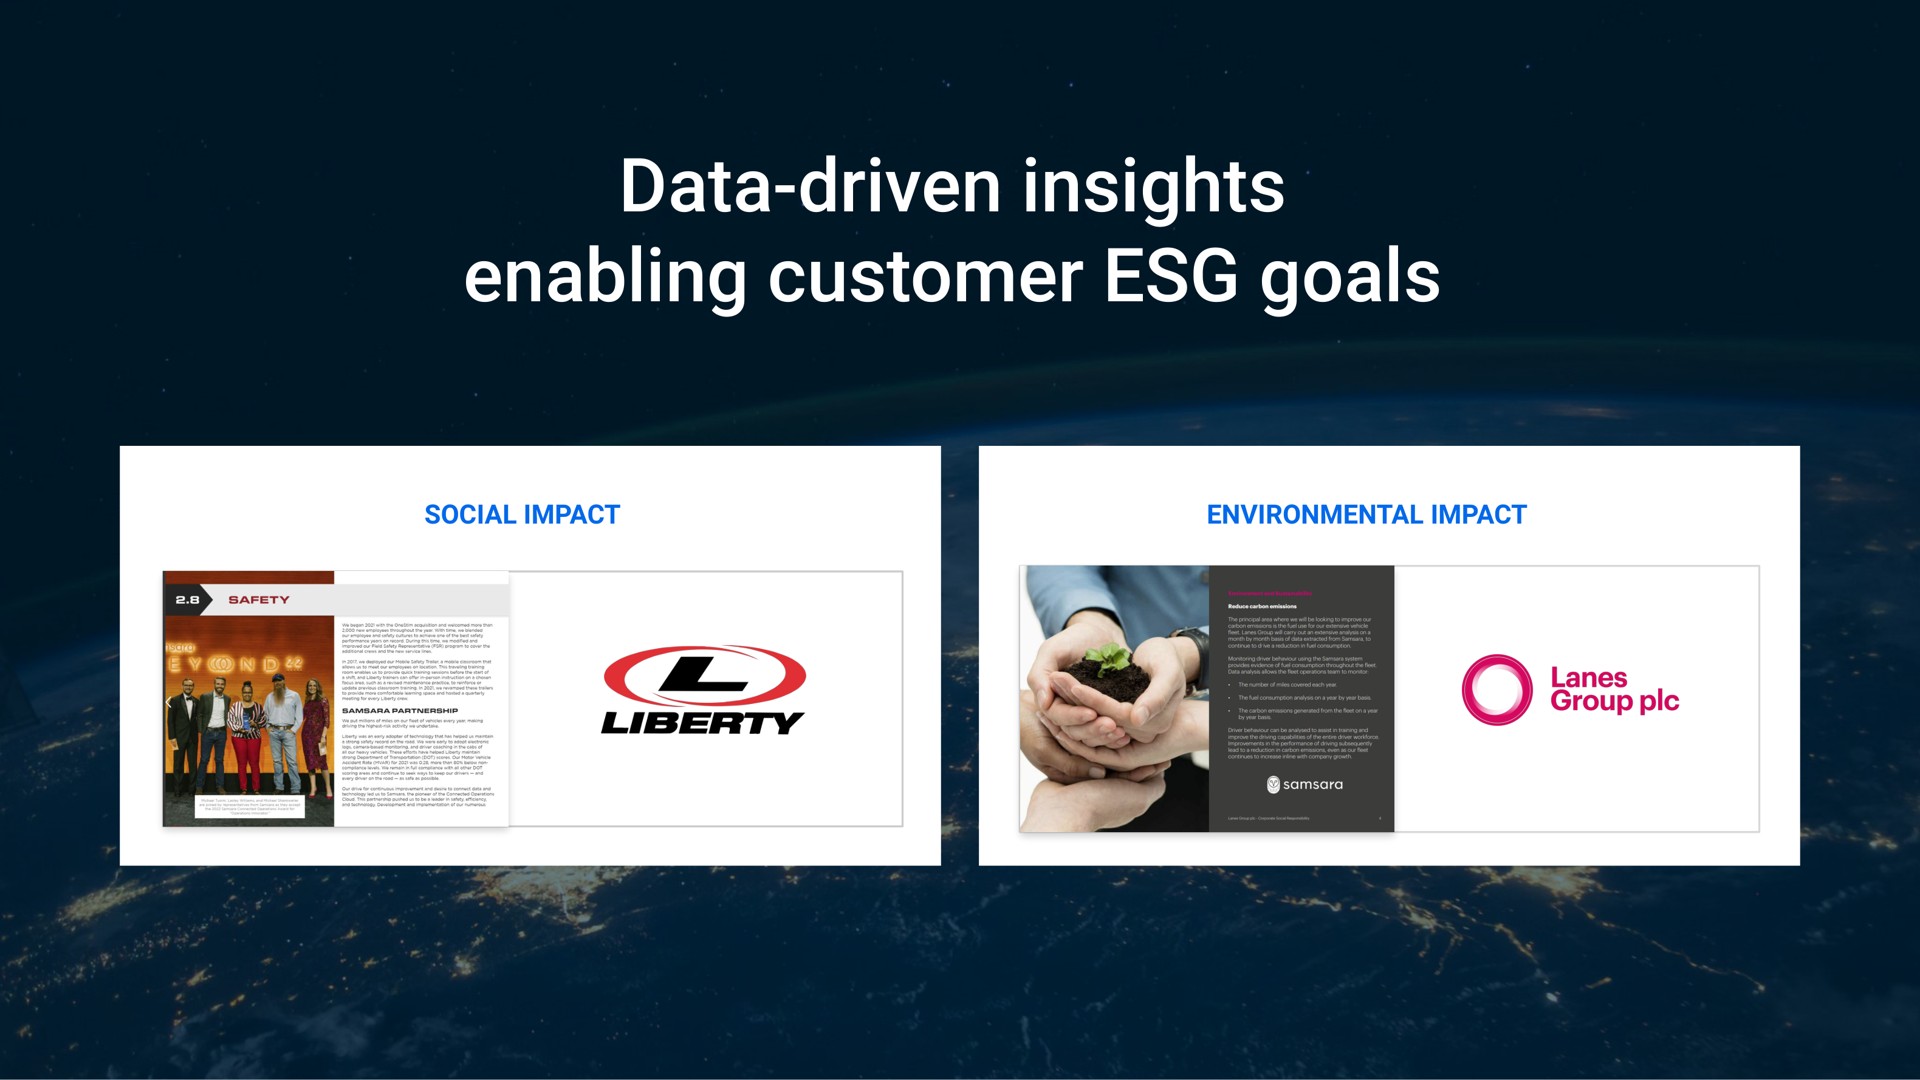 data driven insights enabling customer goals | Samsara